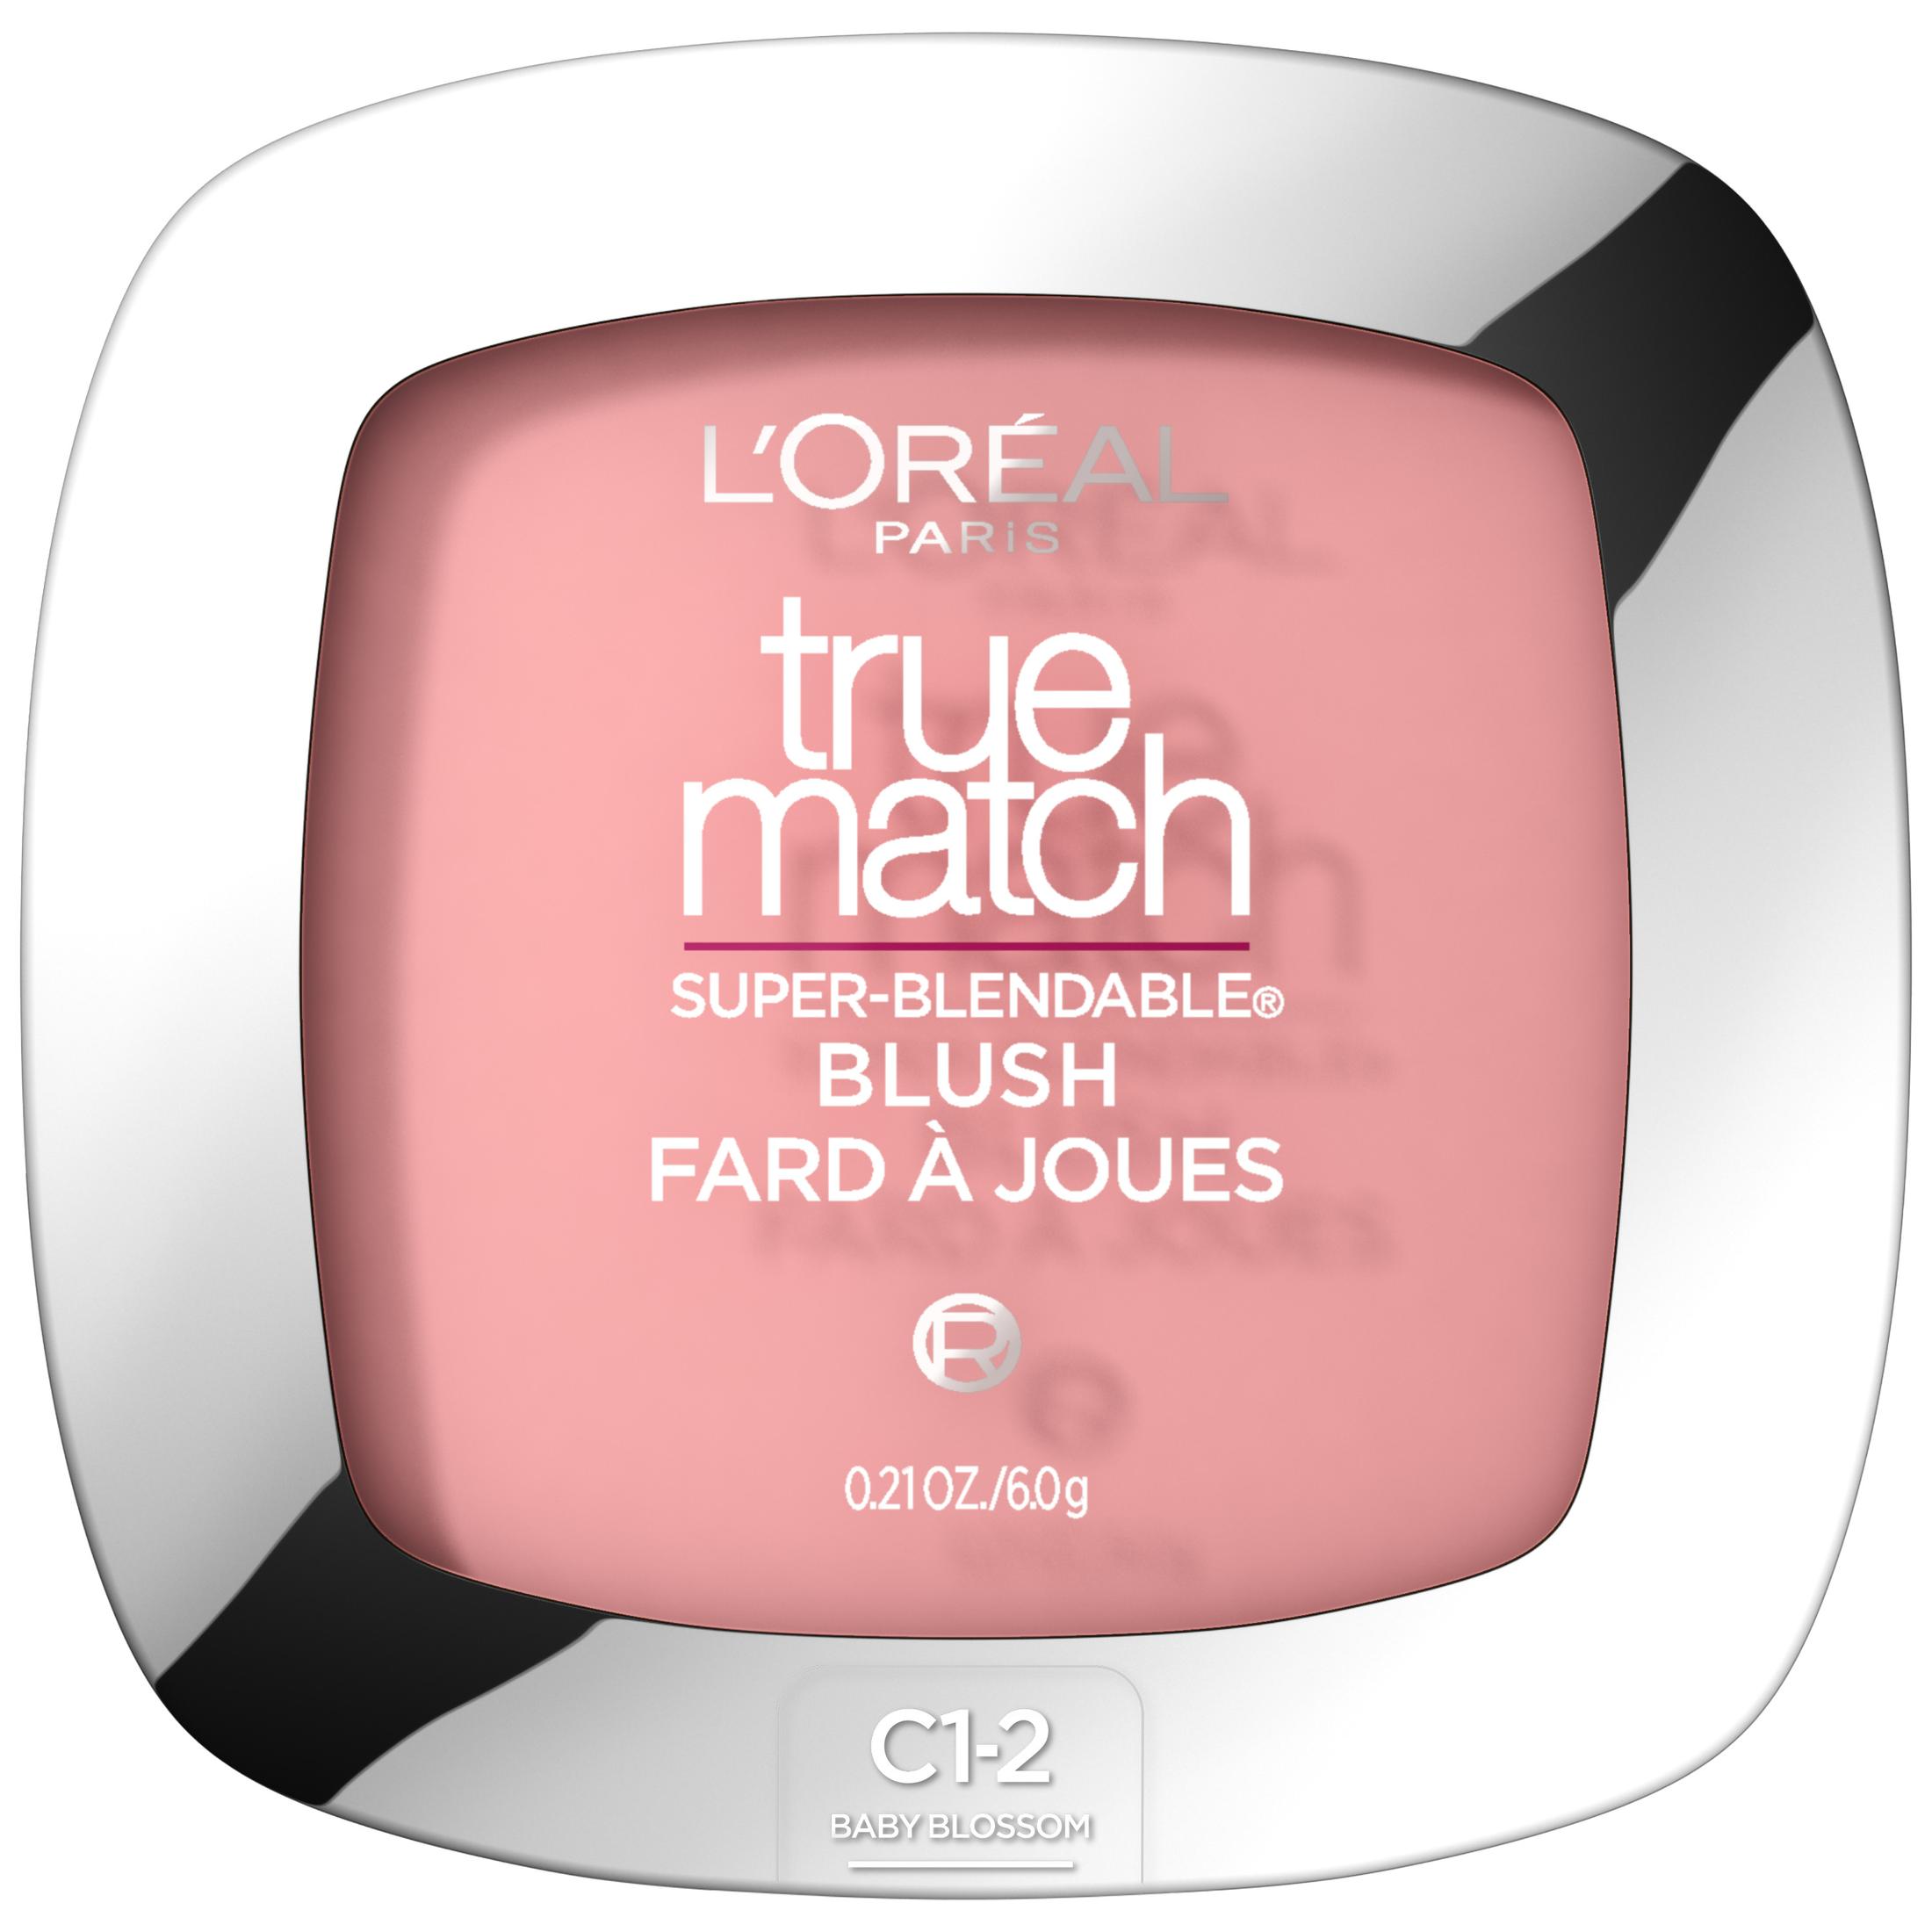 L'Oreal Paris True Match Super Blendable Blush, Soft Powder Texture, Baby Blossom, 0.21 oz - image 1 of 7